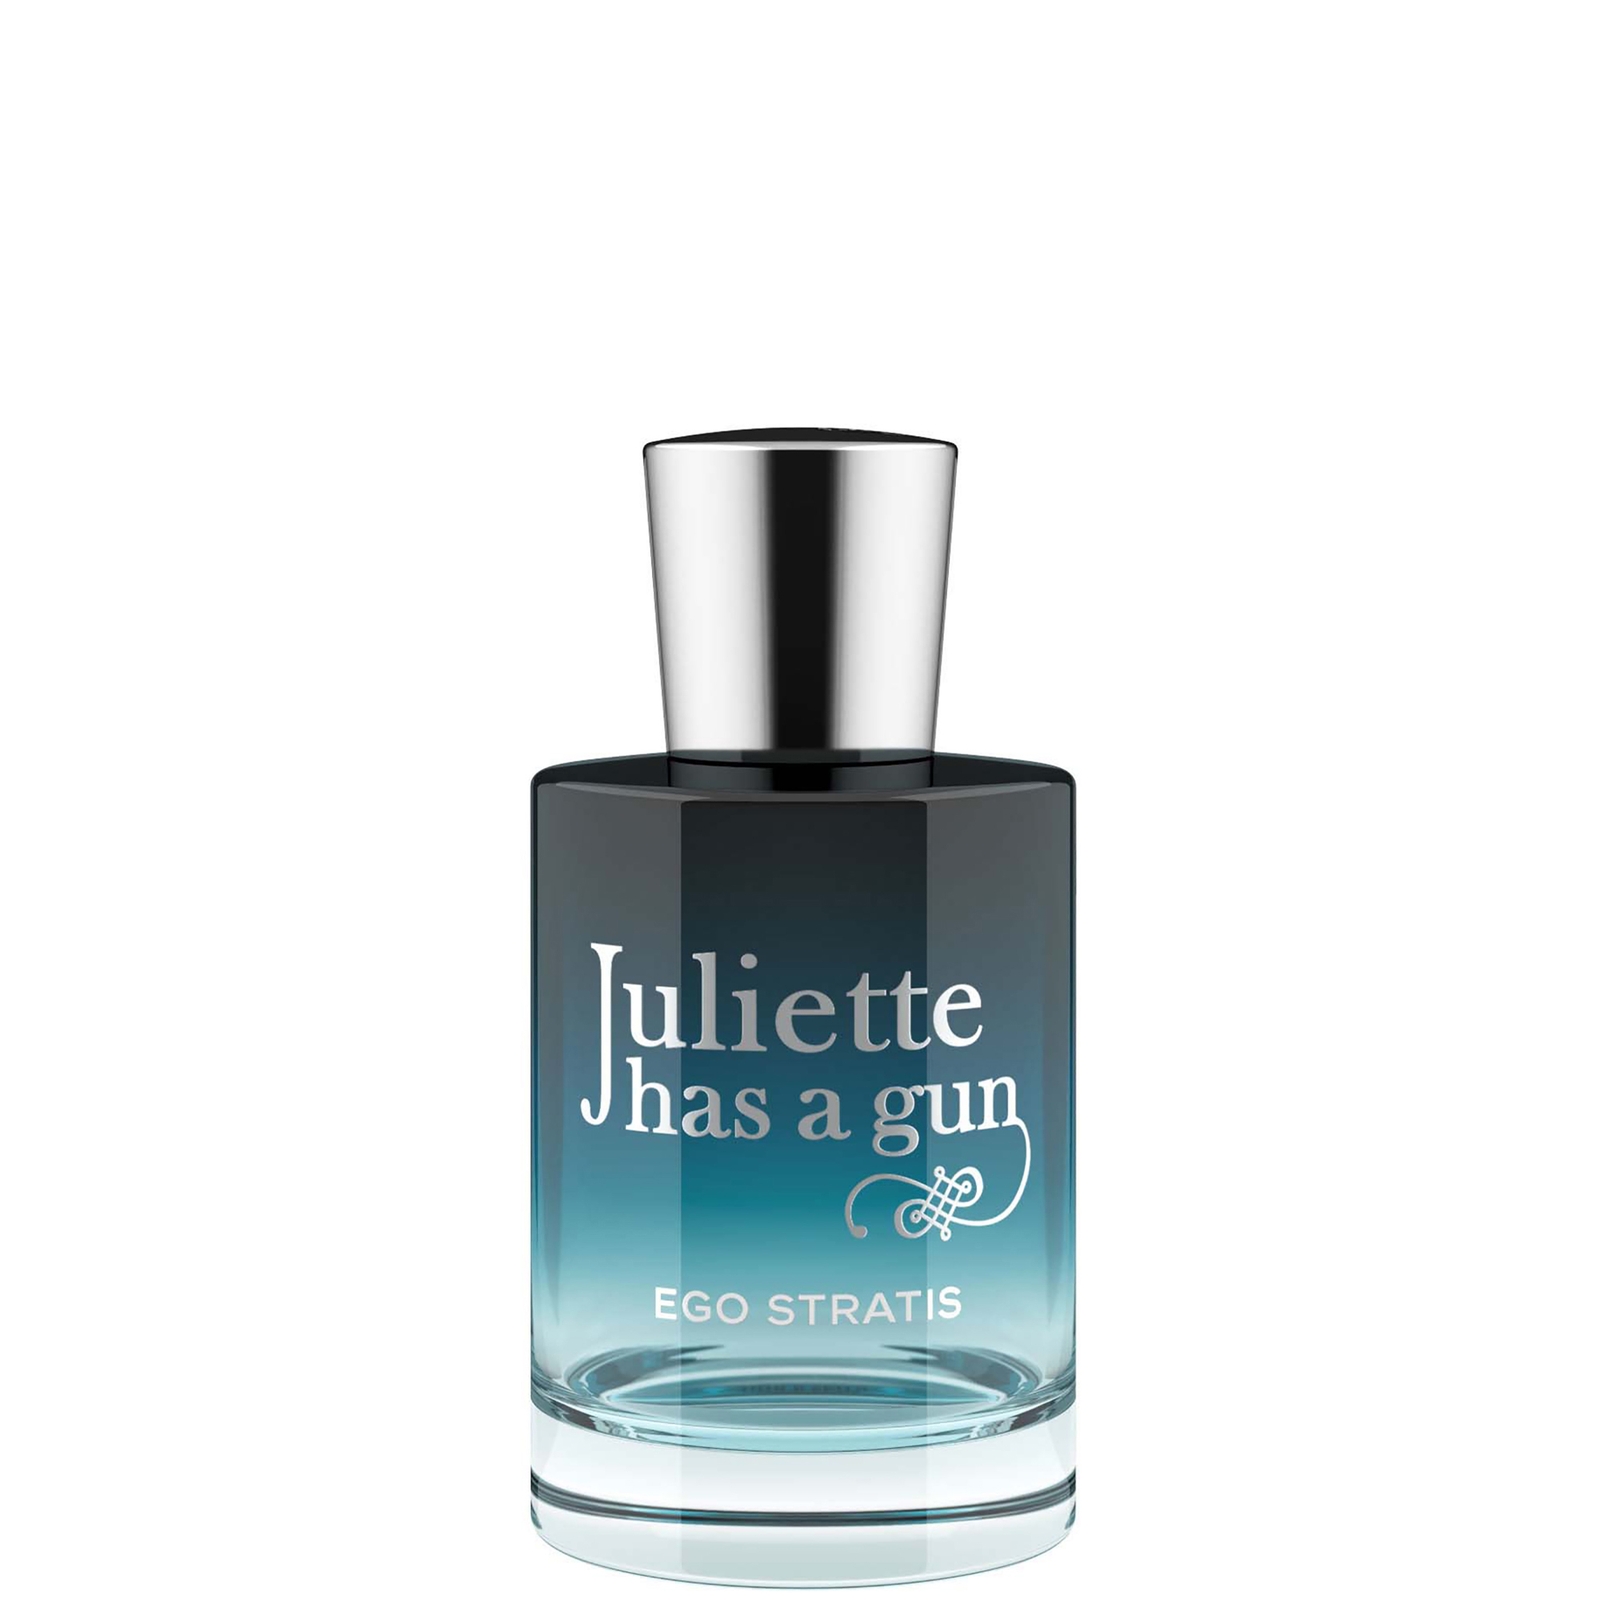 Juliette Has a Gun Ego Stratis Eau de Parfum 50ml